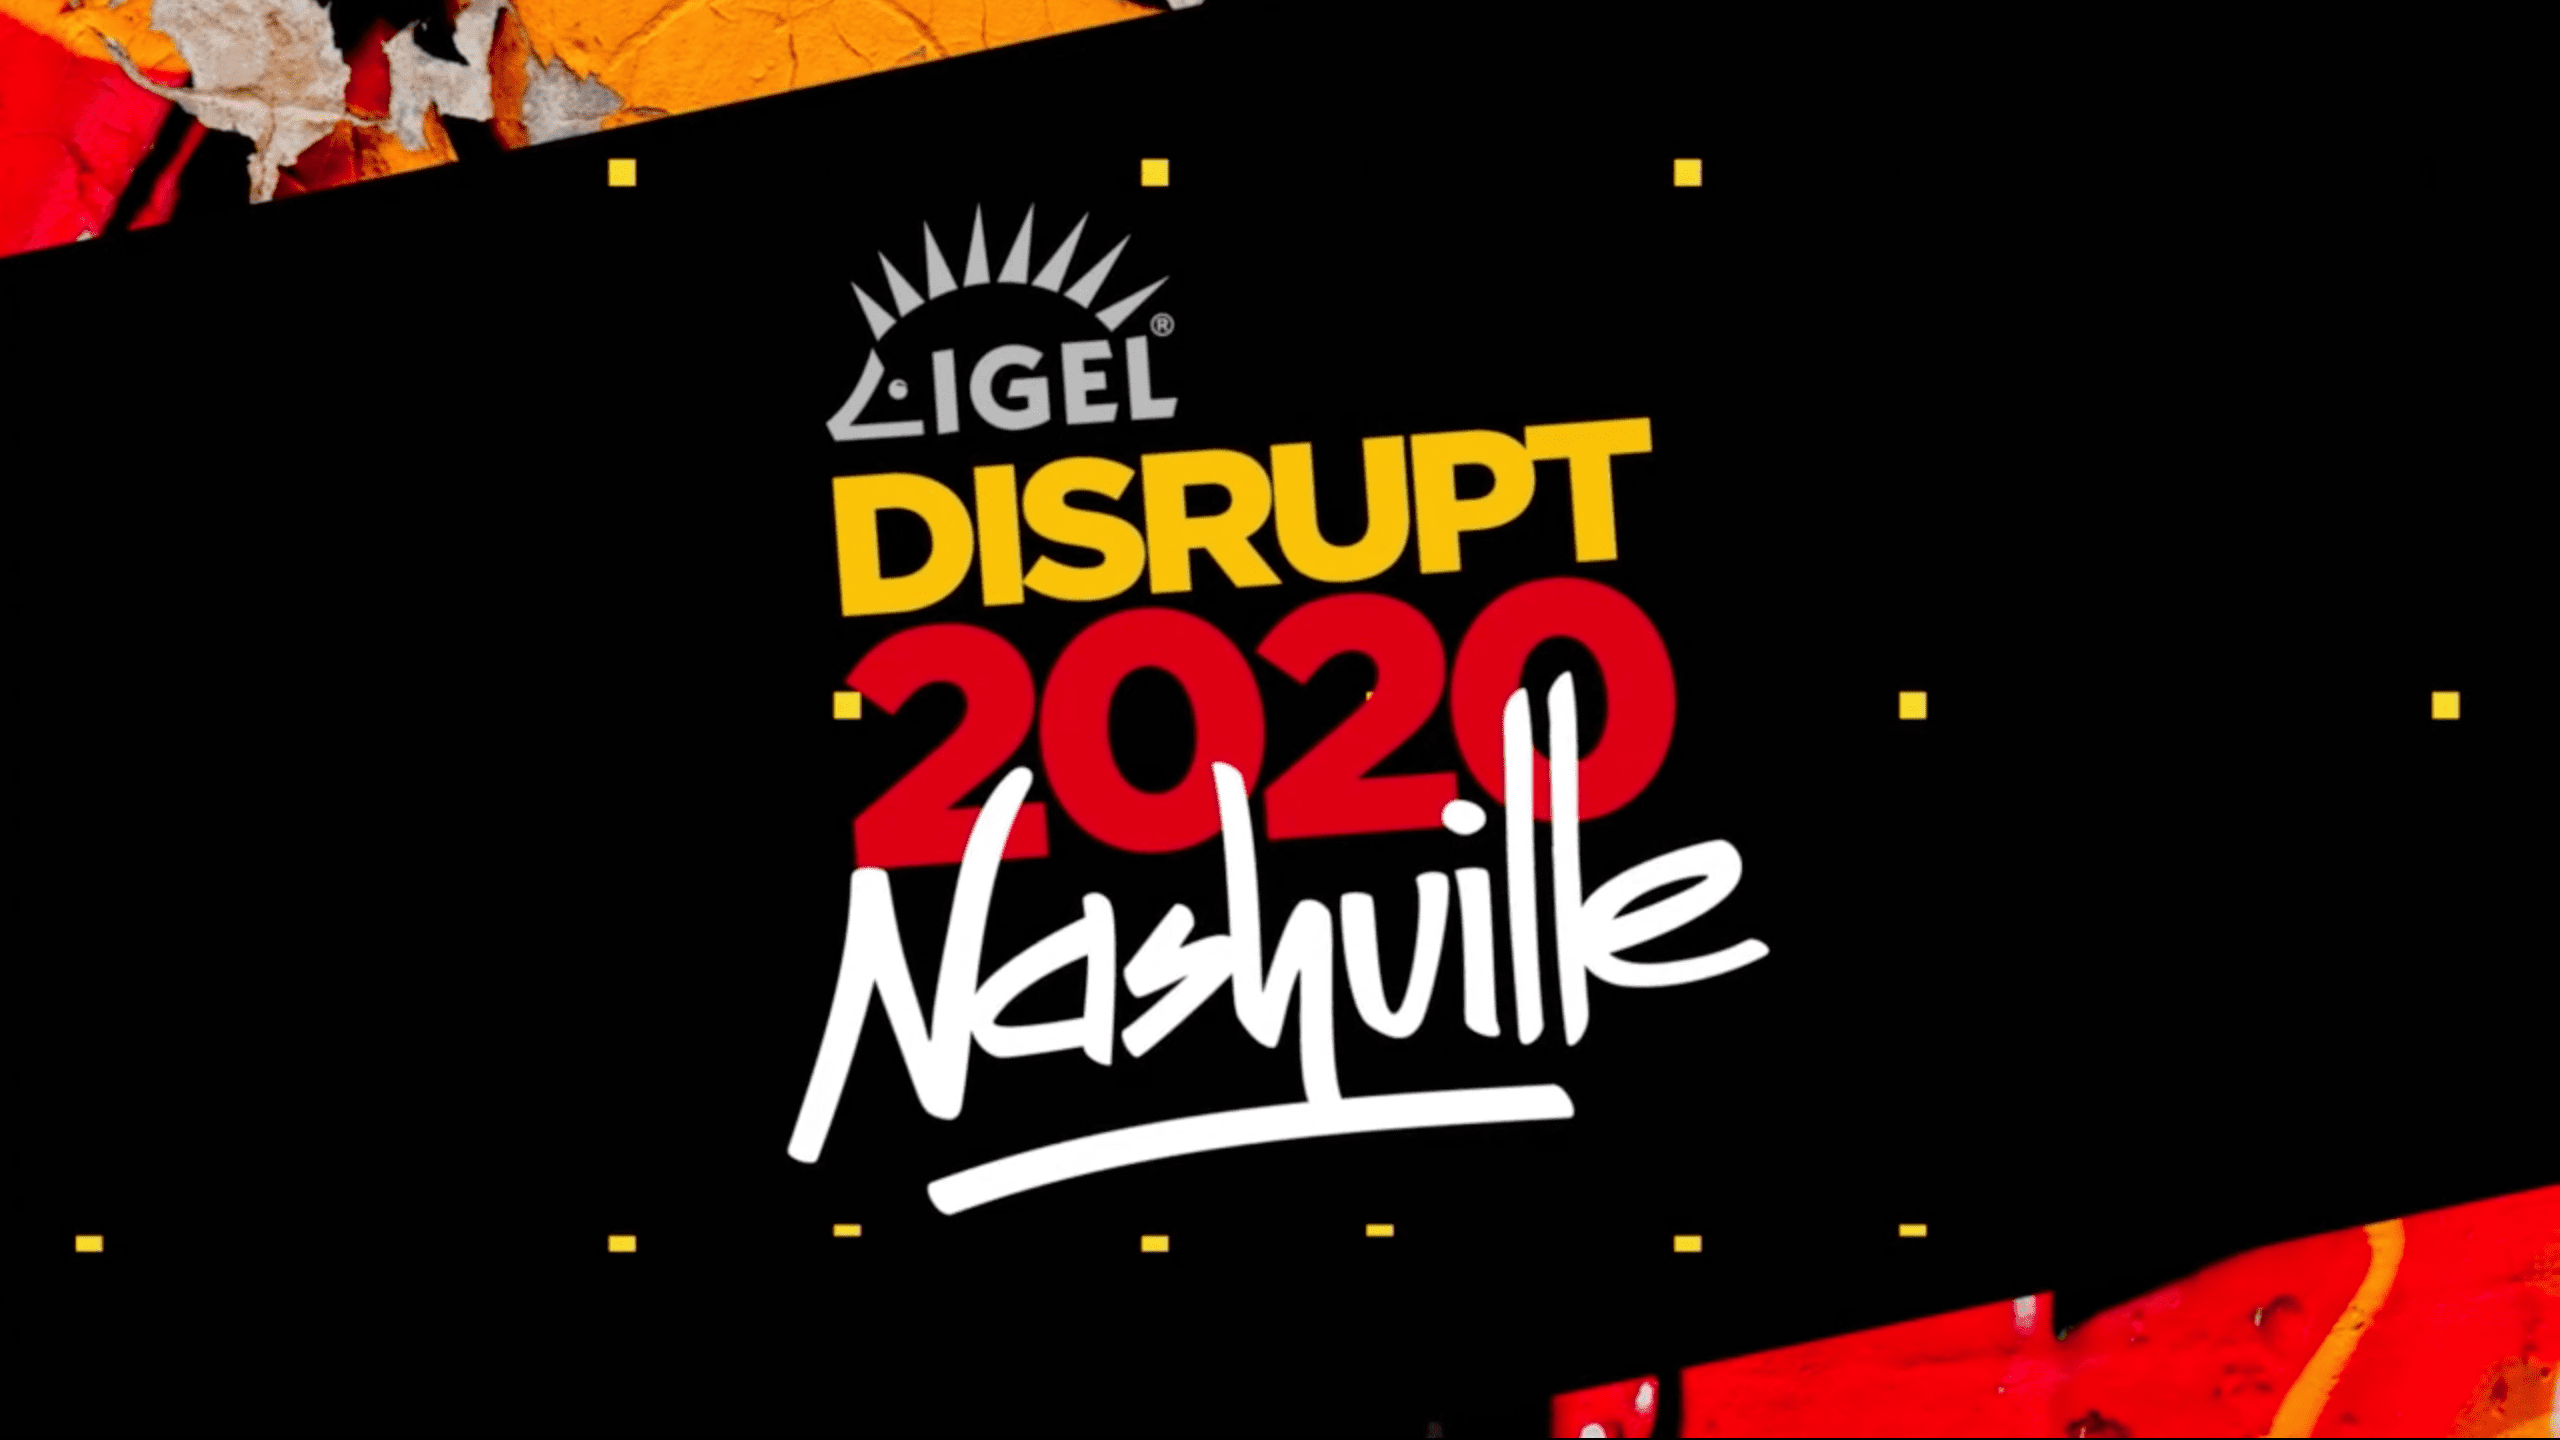 IGEL Disrupt 2020 Nashville promo featuring Jed Ayres